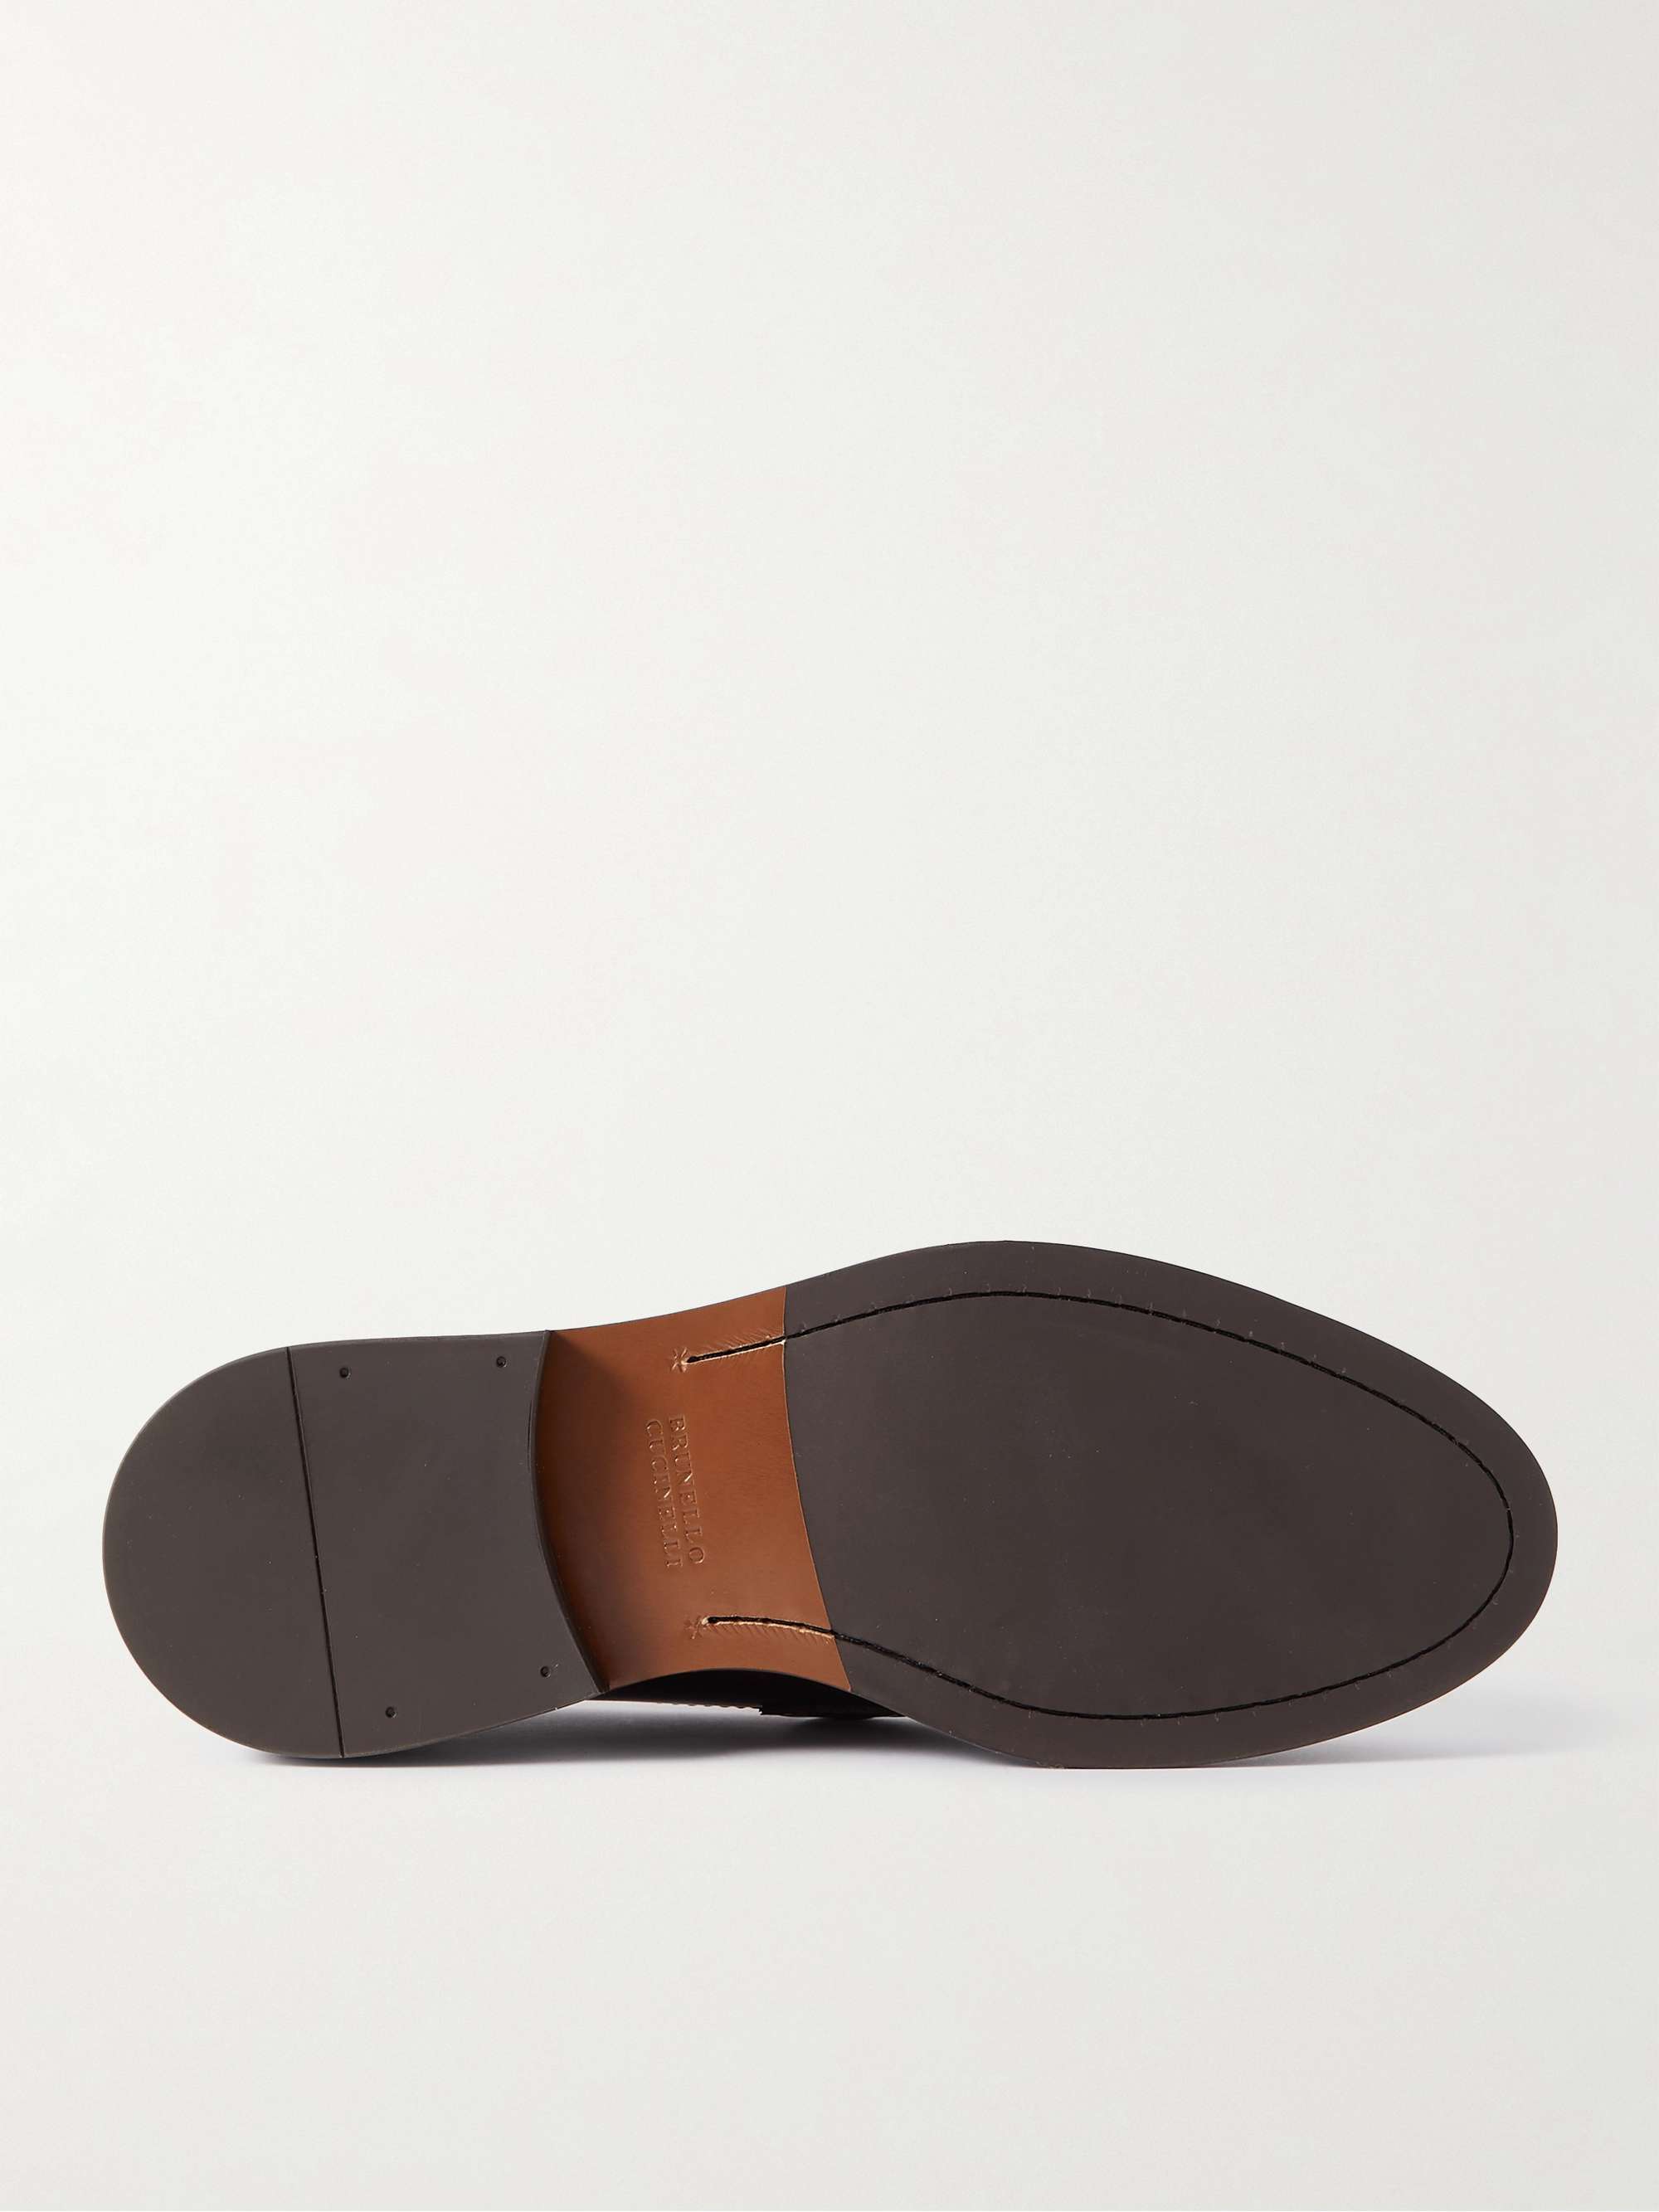 BRUNELLO CUCINELLI Leather Loafers for Men | MR PORTER